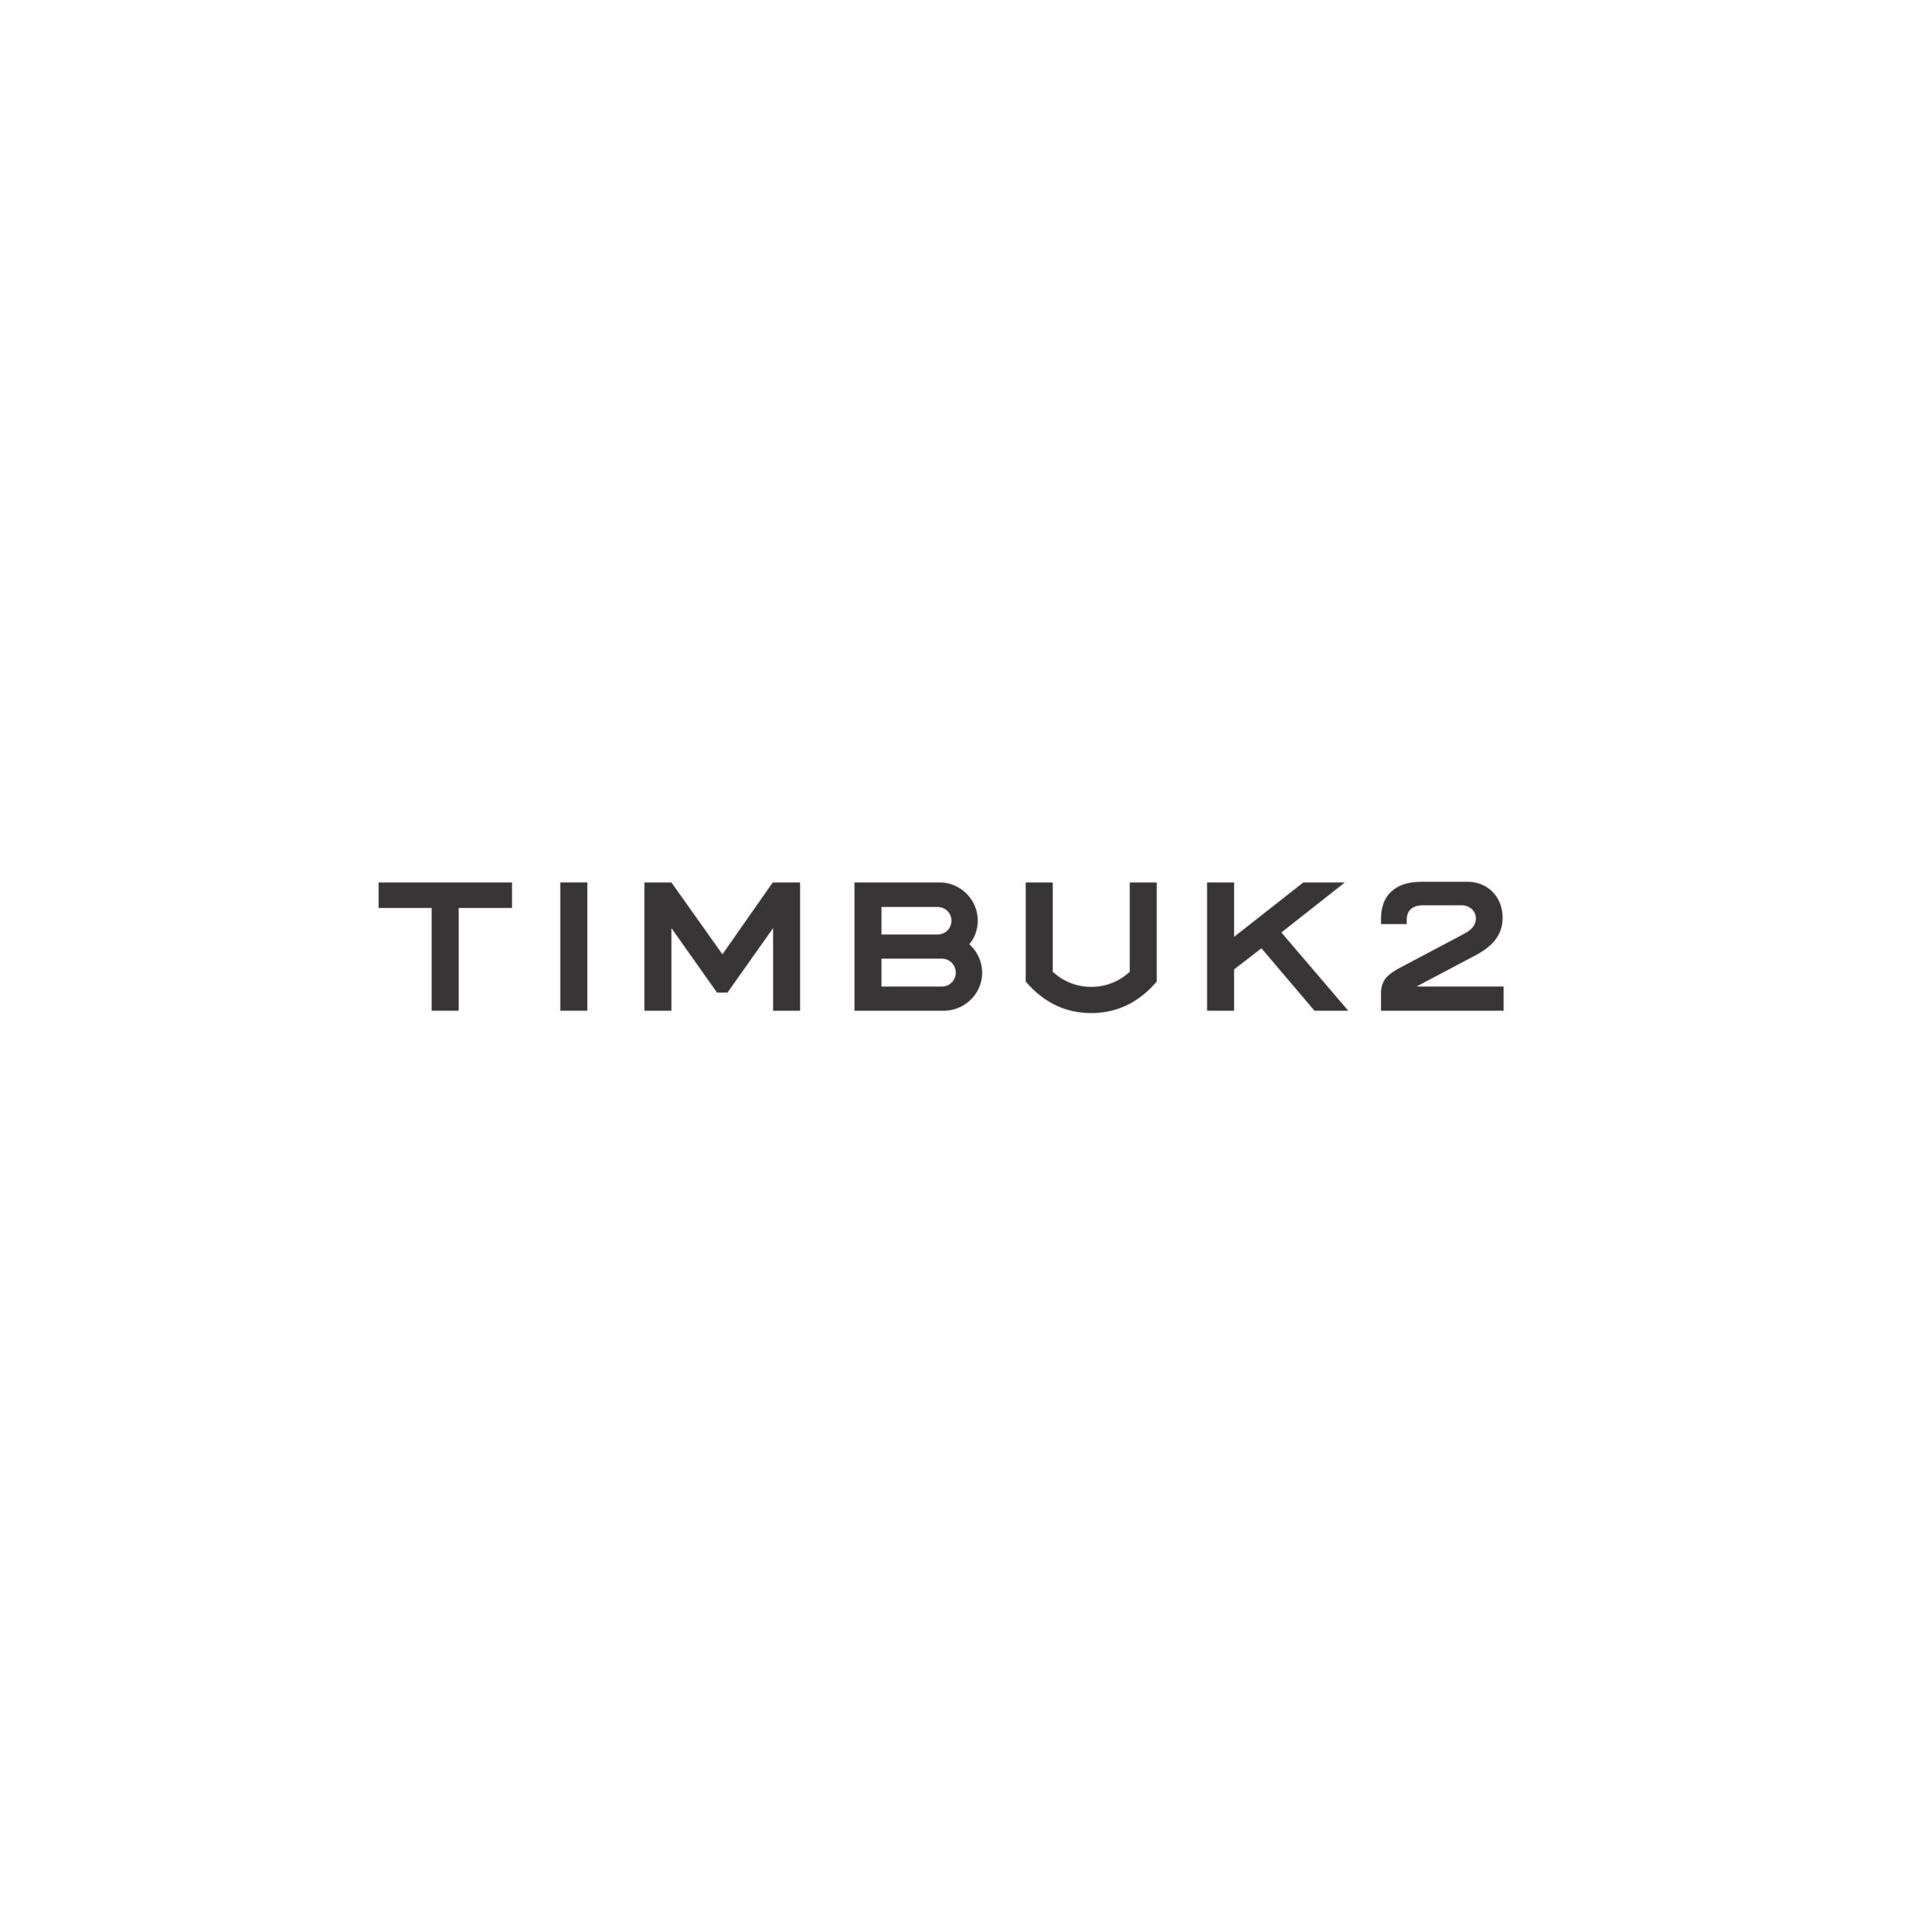 Timbuk2 Logo 2021 ?>